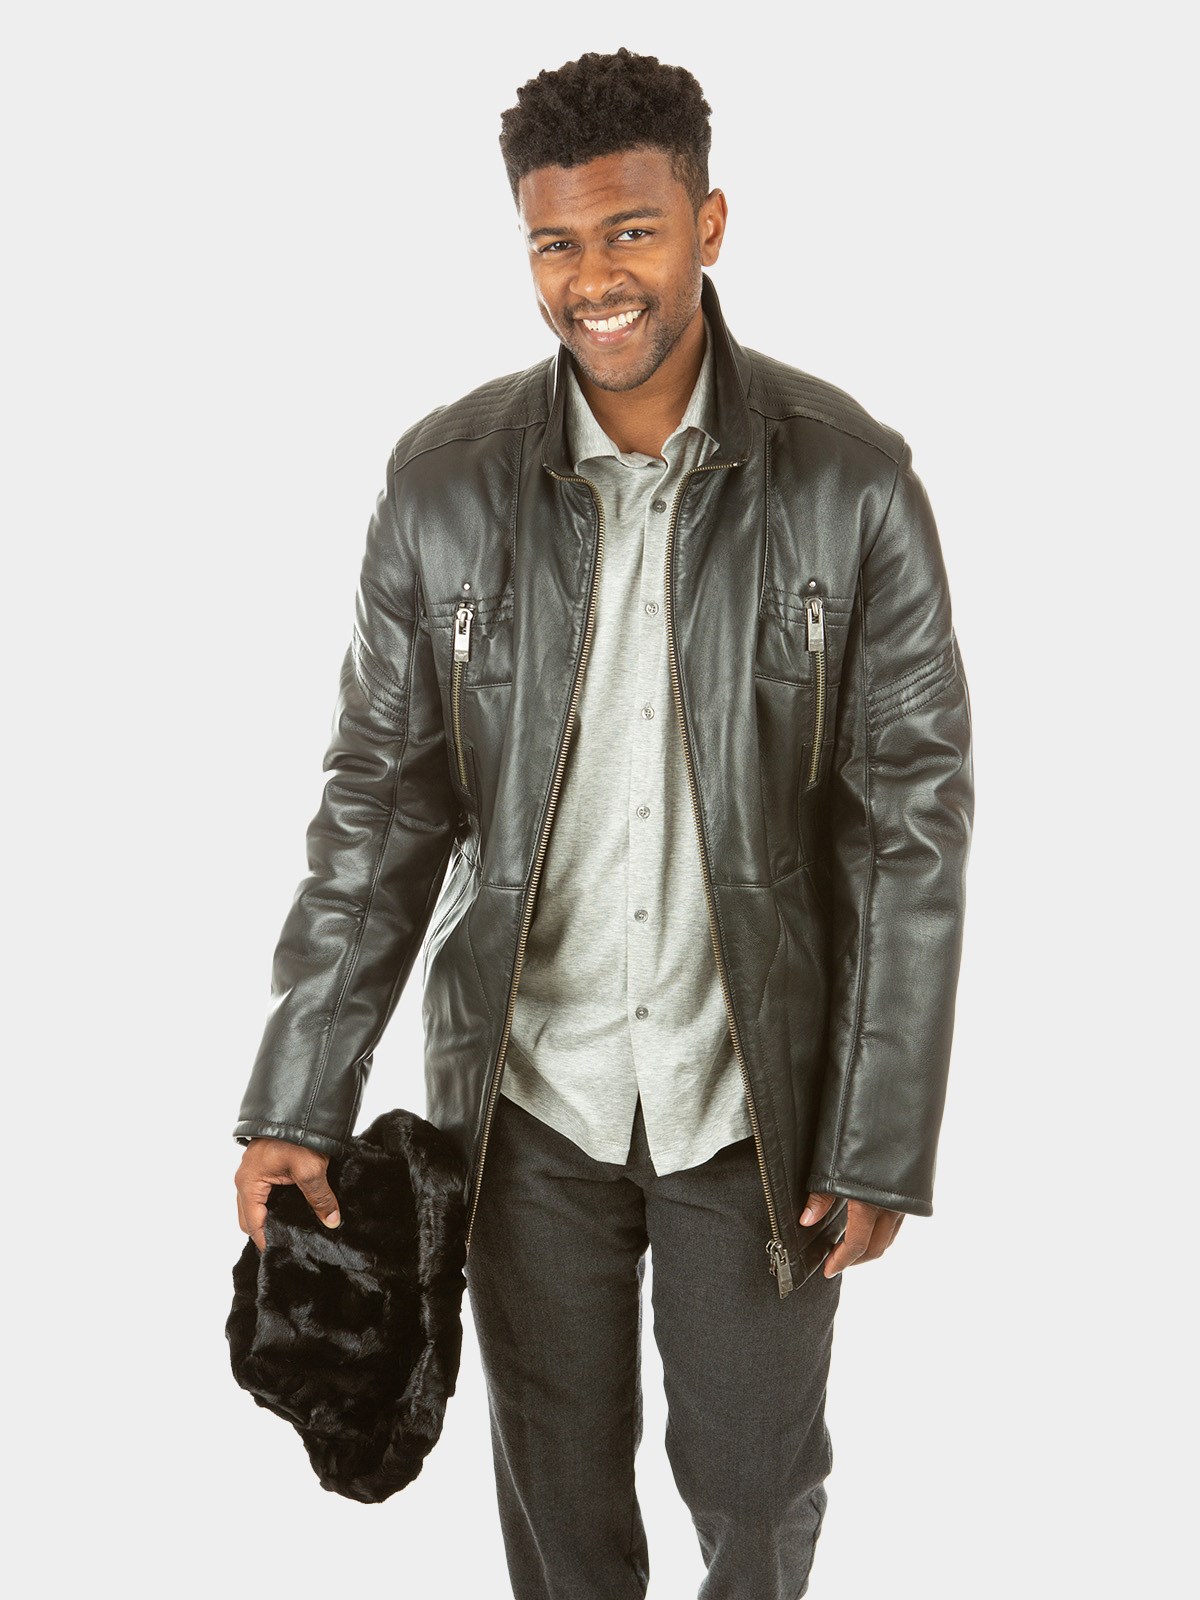 Man's Black Leather Jacket